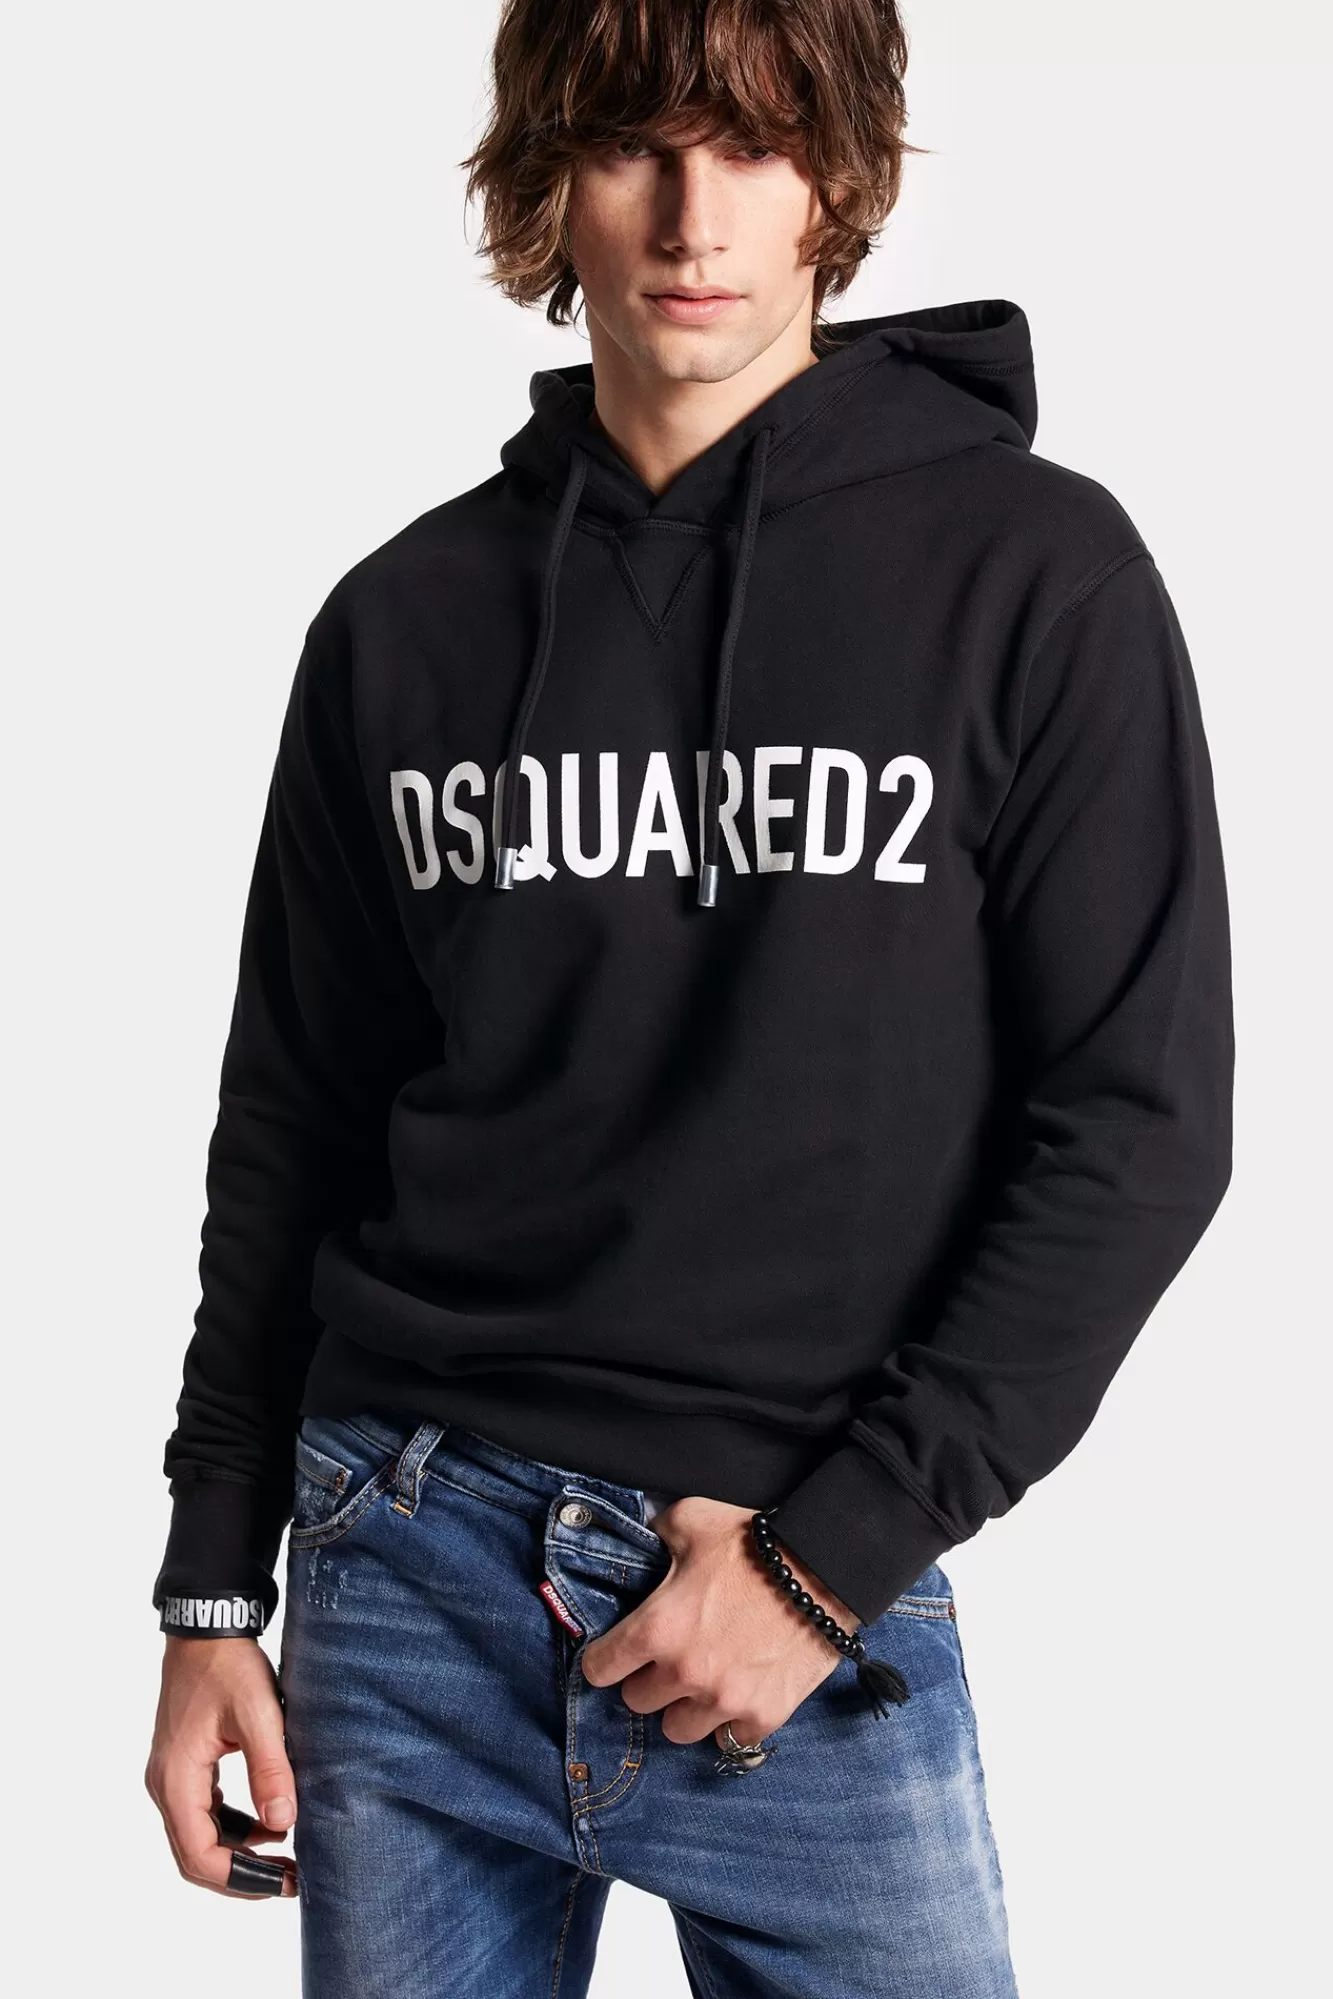 Cool Sweatshirt<Dsquared2 Cheap